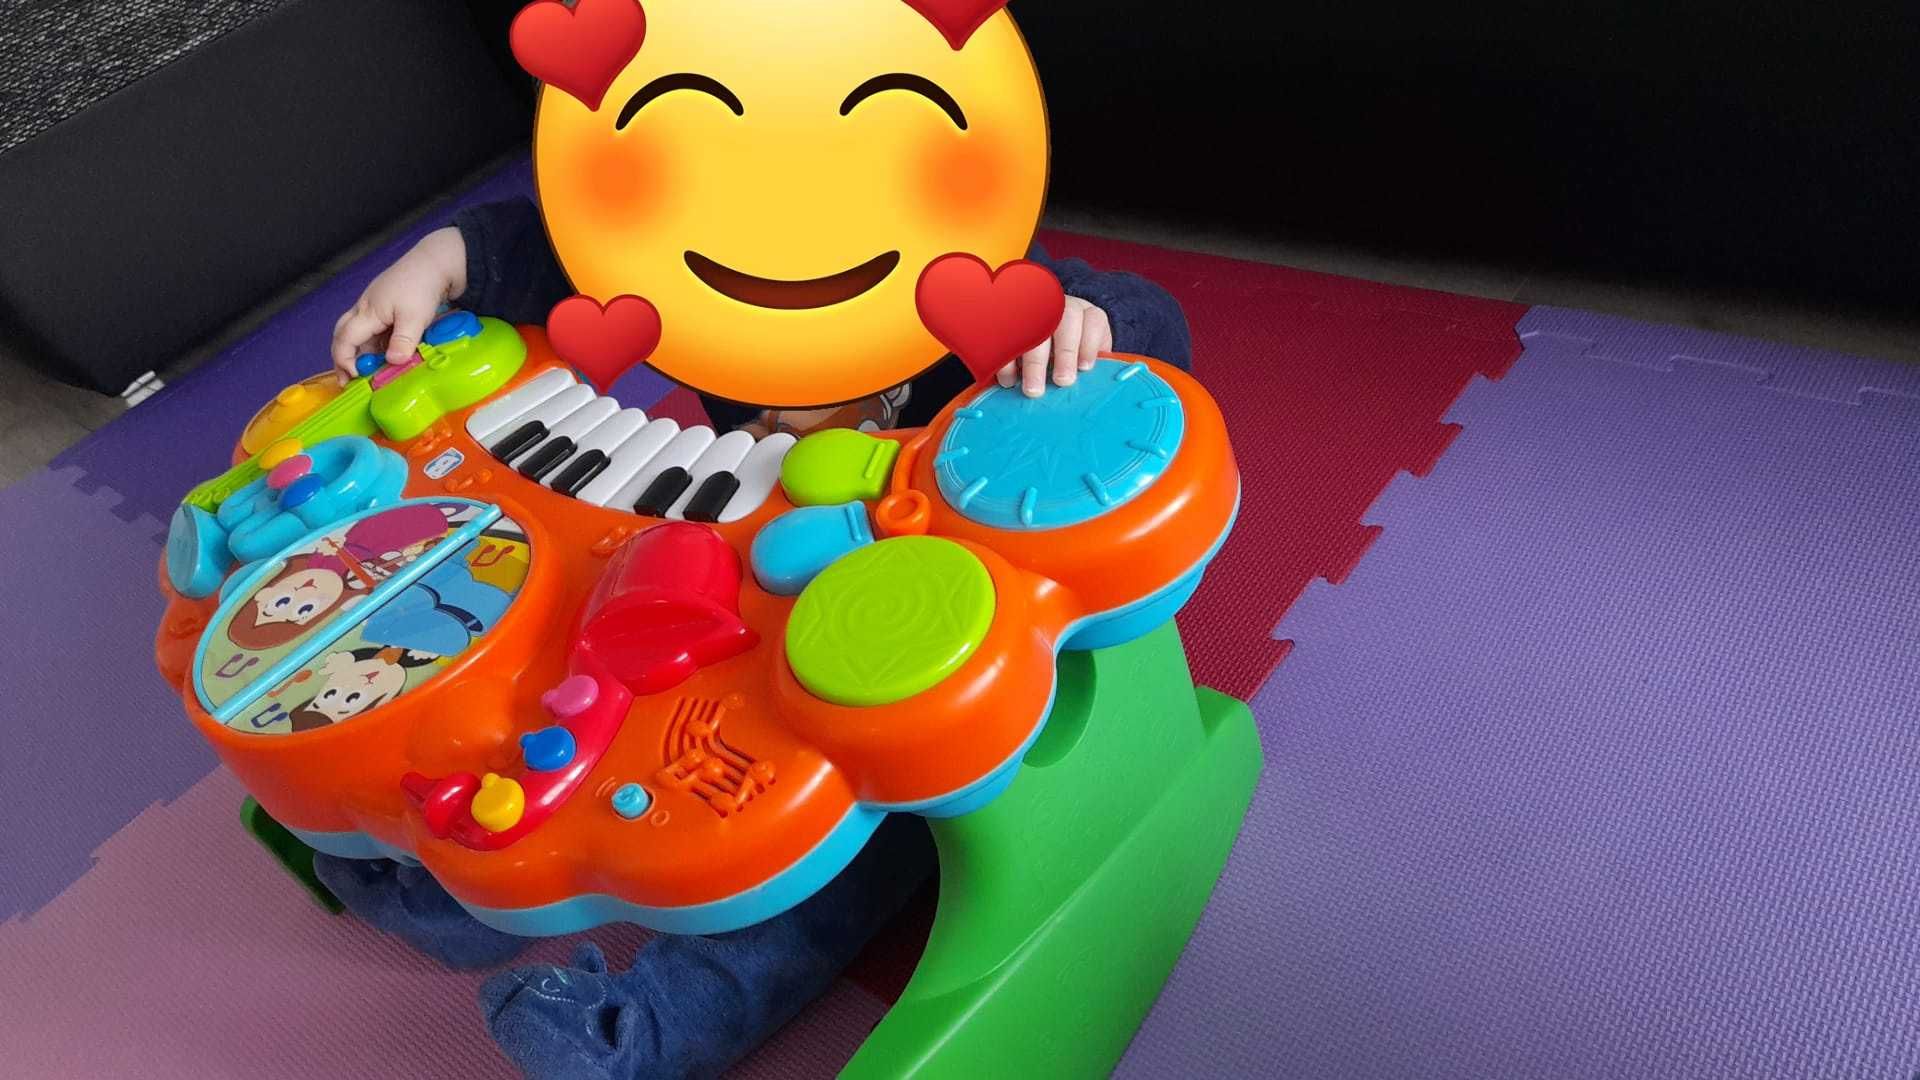 Pian copii B Kids 12-36 luni cu instrumentele + carte muzicala cadou